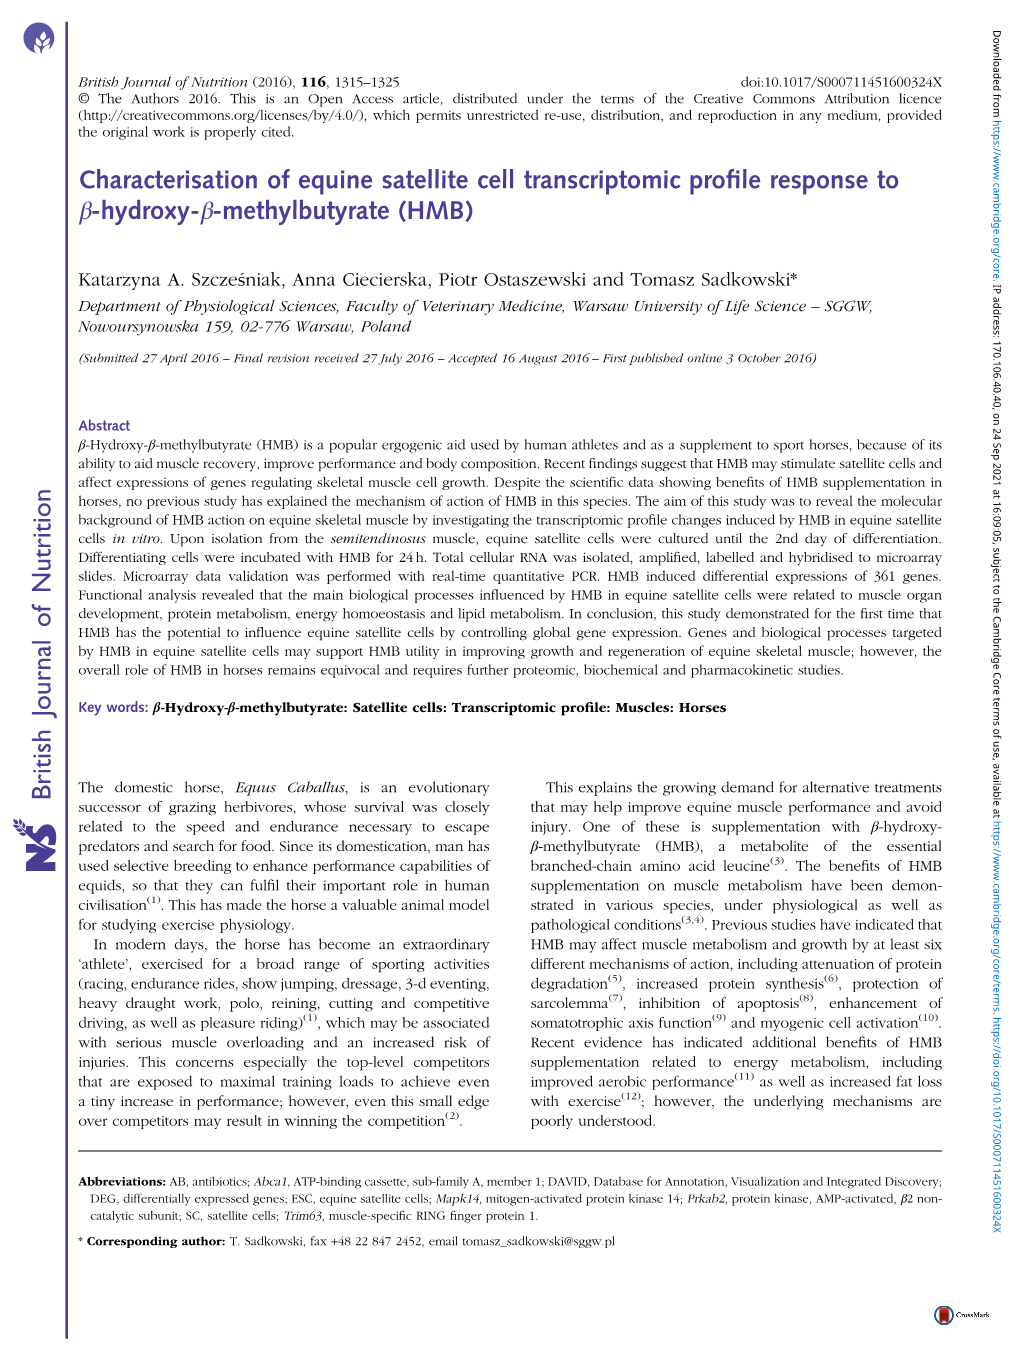 Characterisation of Equine Satellite Cell Transcriptomic Profile Response